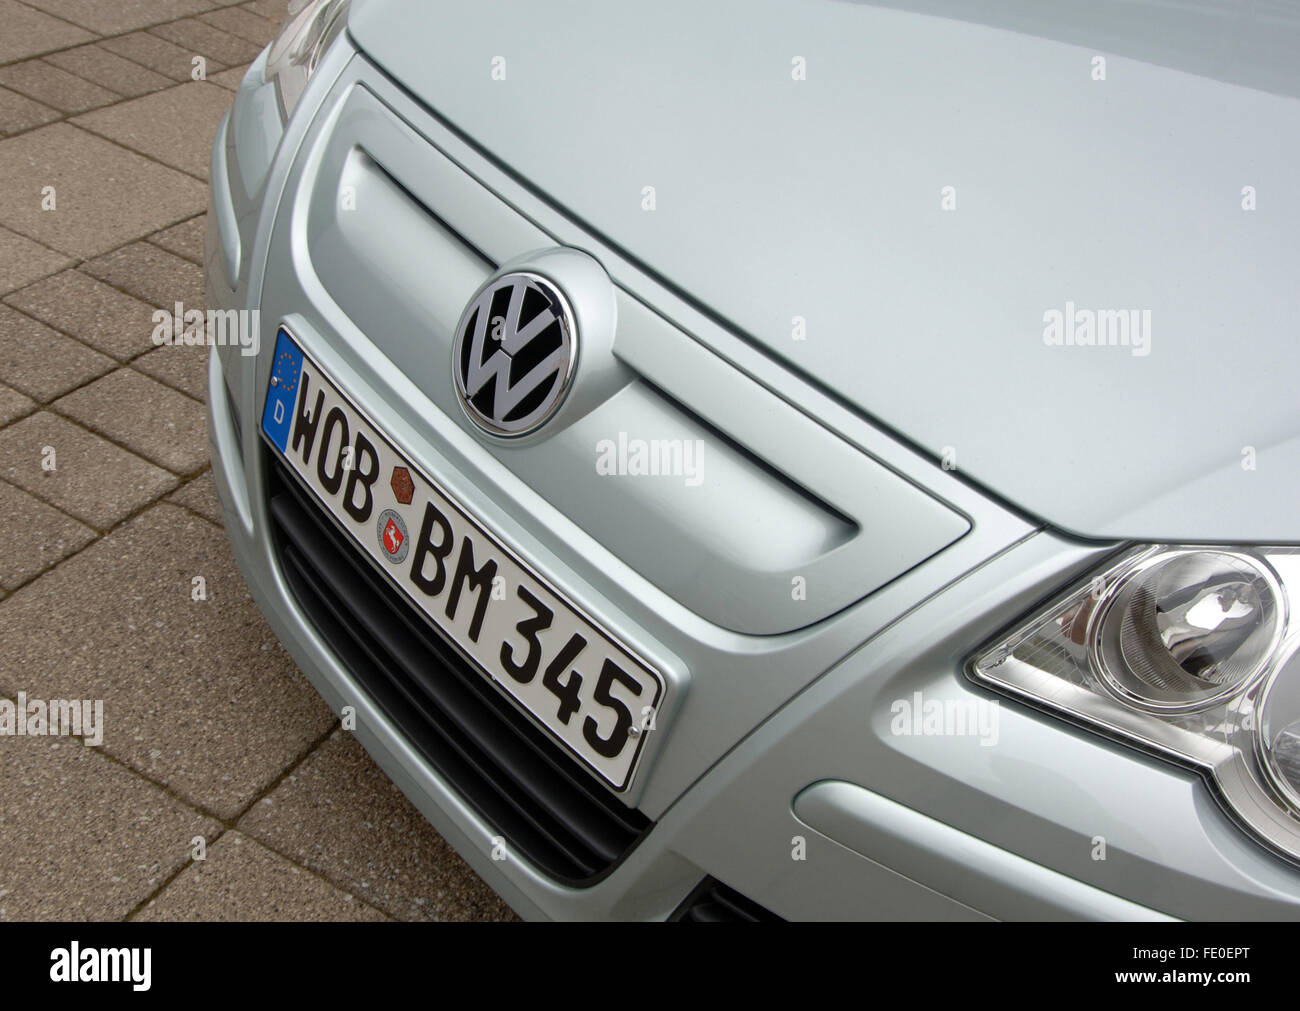 2007 VW Volkswagen Polo BlueMotion high efficiency diesel eco car Stock  Photo - Alamy